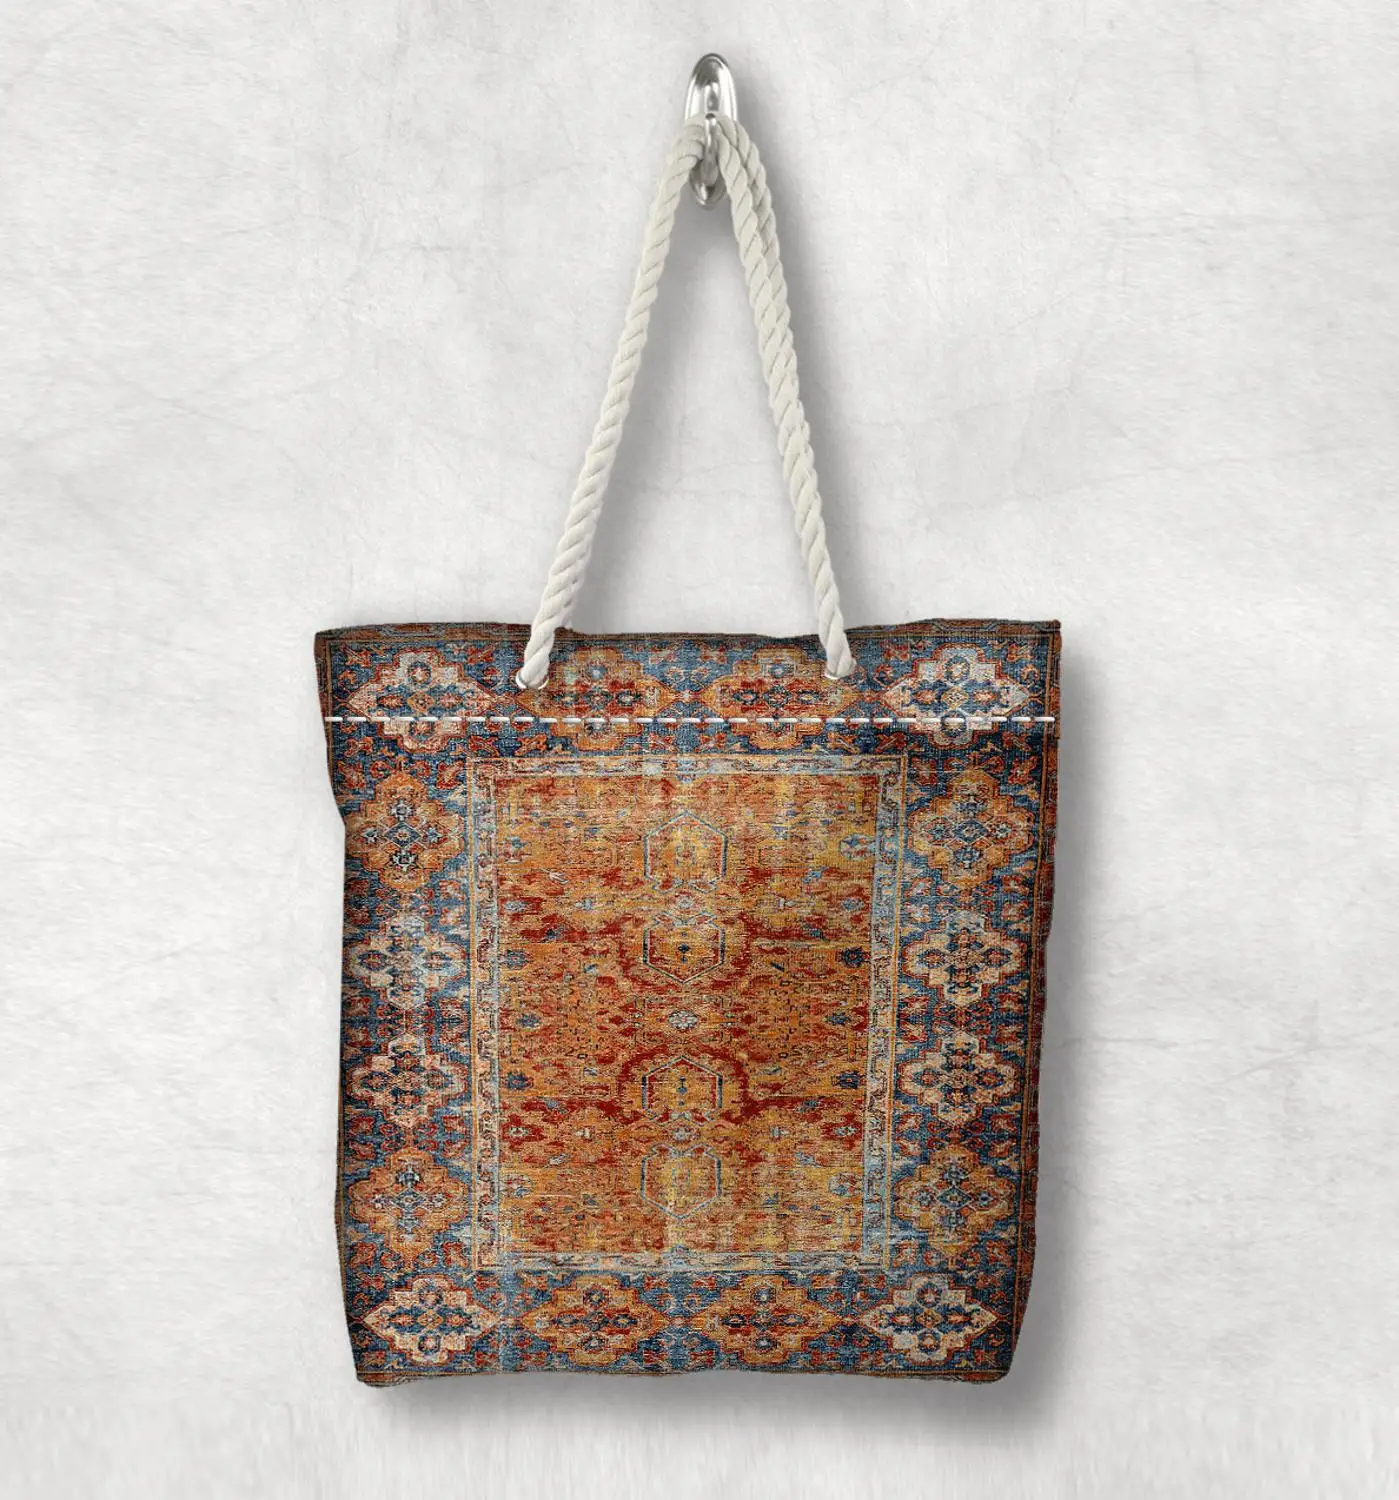 

Else Orange Brown Turkey Anatolia Antique Kilim Design White Rope Handle Canvas Bag Cotton Canvas Zippered Tote Bag Shoulder Bag